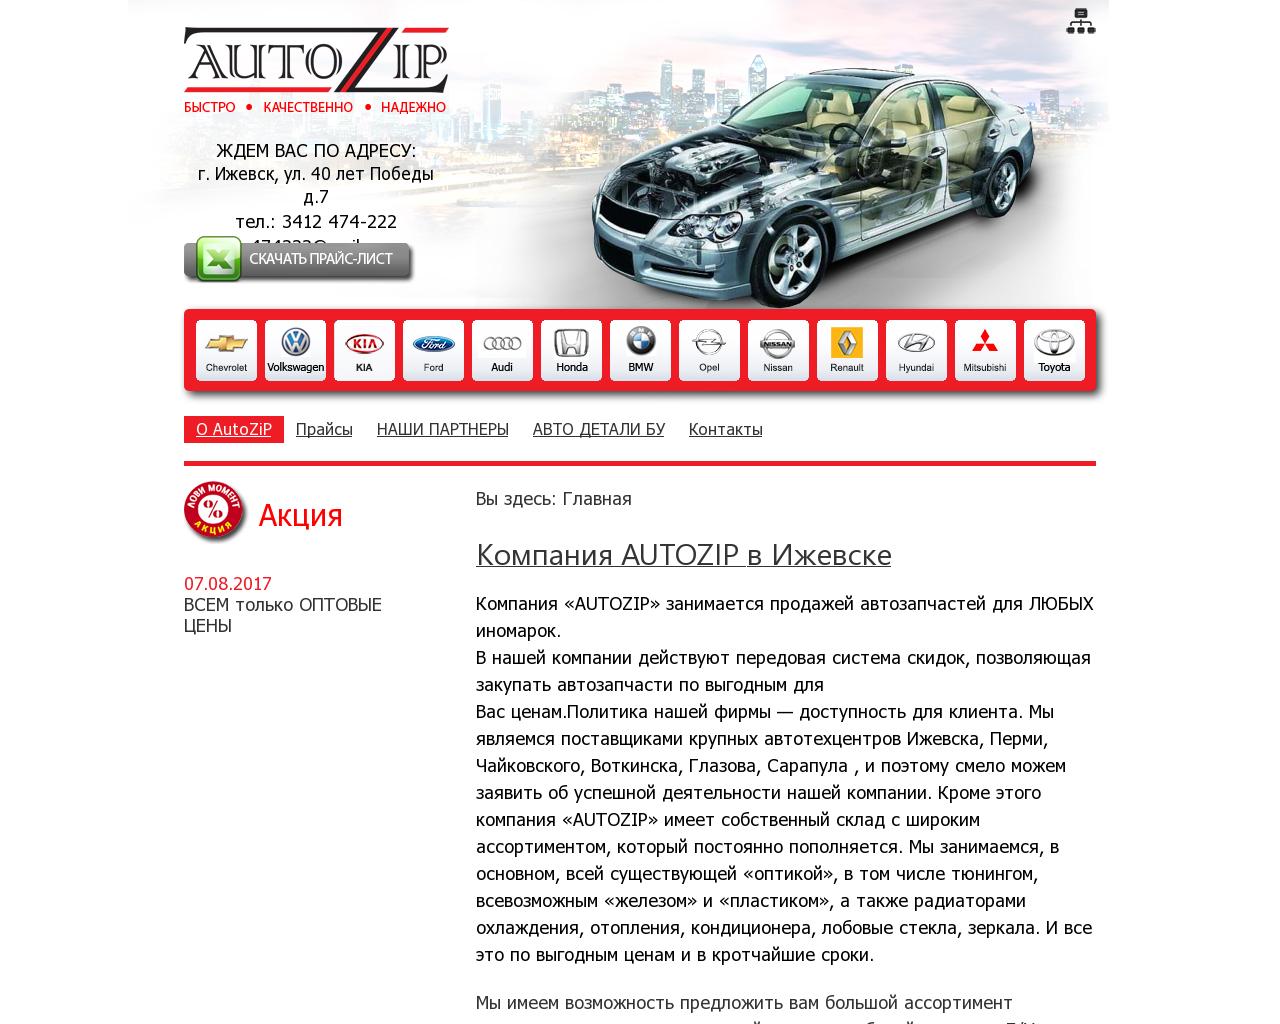 Изображение сайта autozip18.ru в разрешении 1280x1024